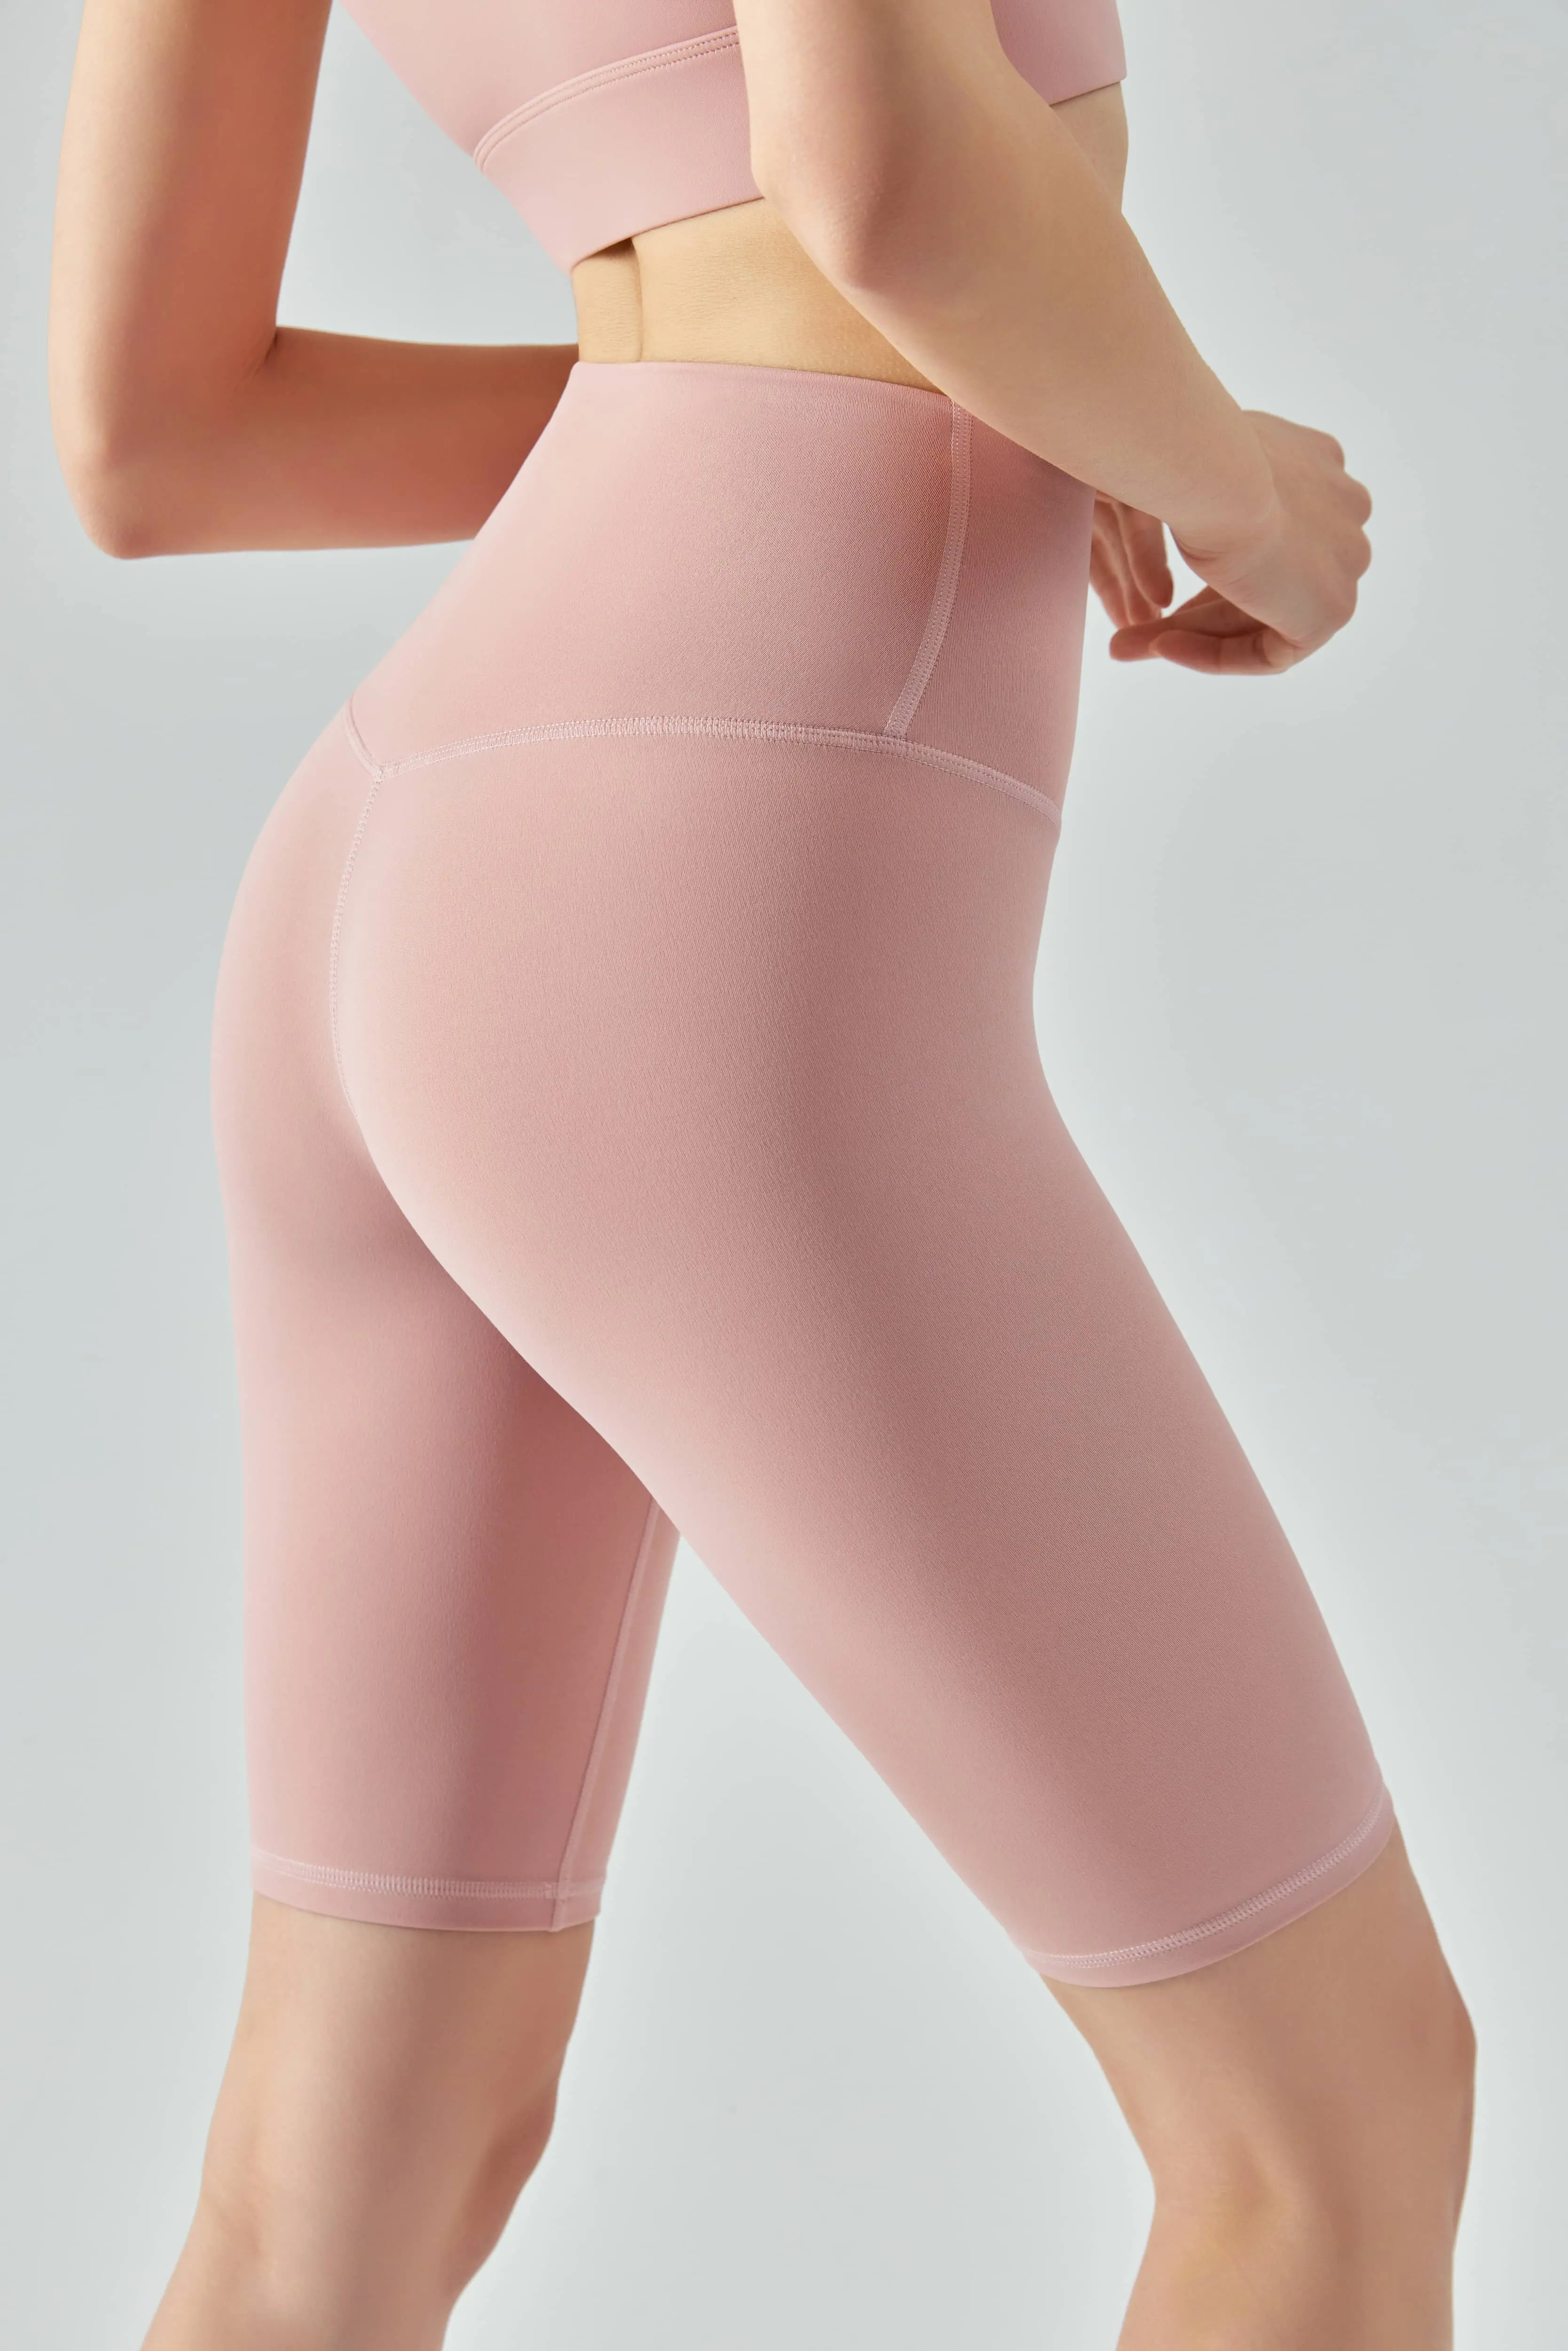 Wholesale High Waist Yoga Capri Pants - Butt Lifting, Fitness